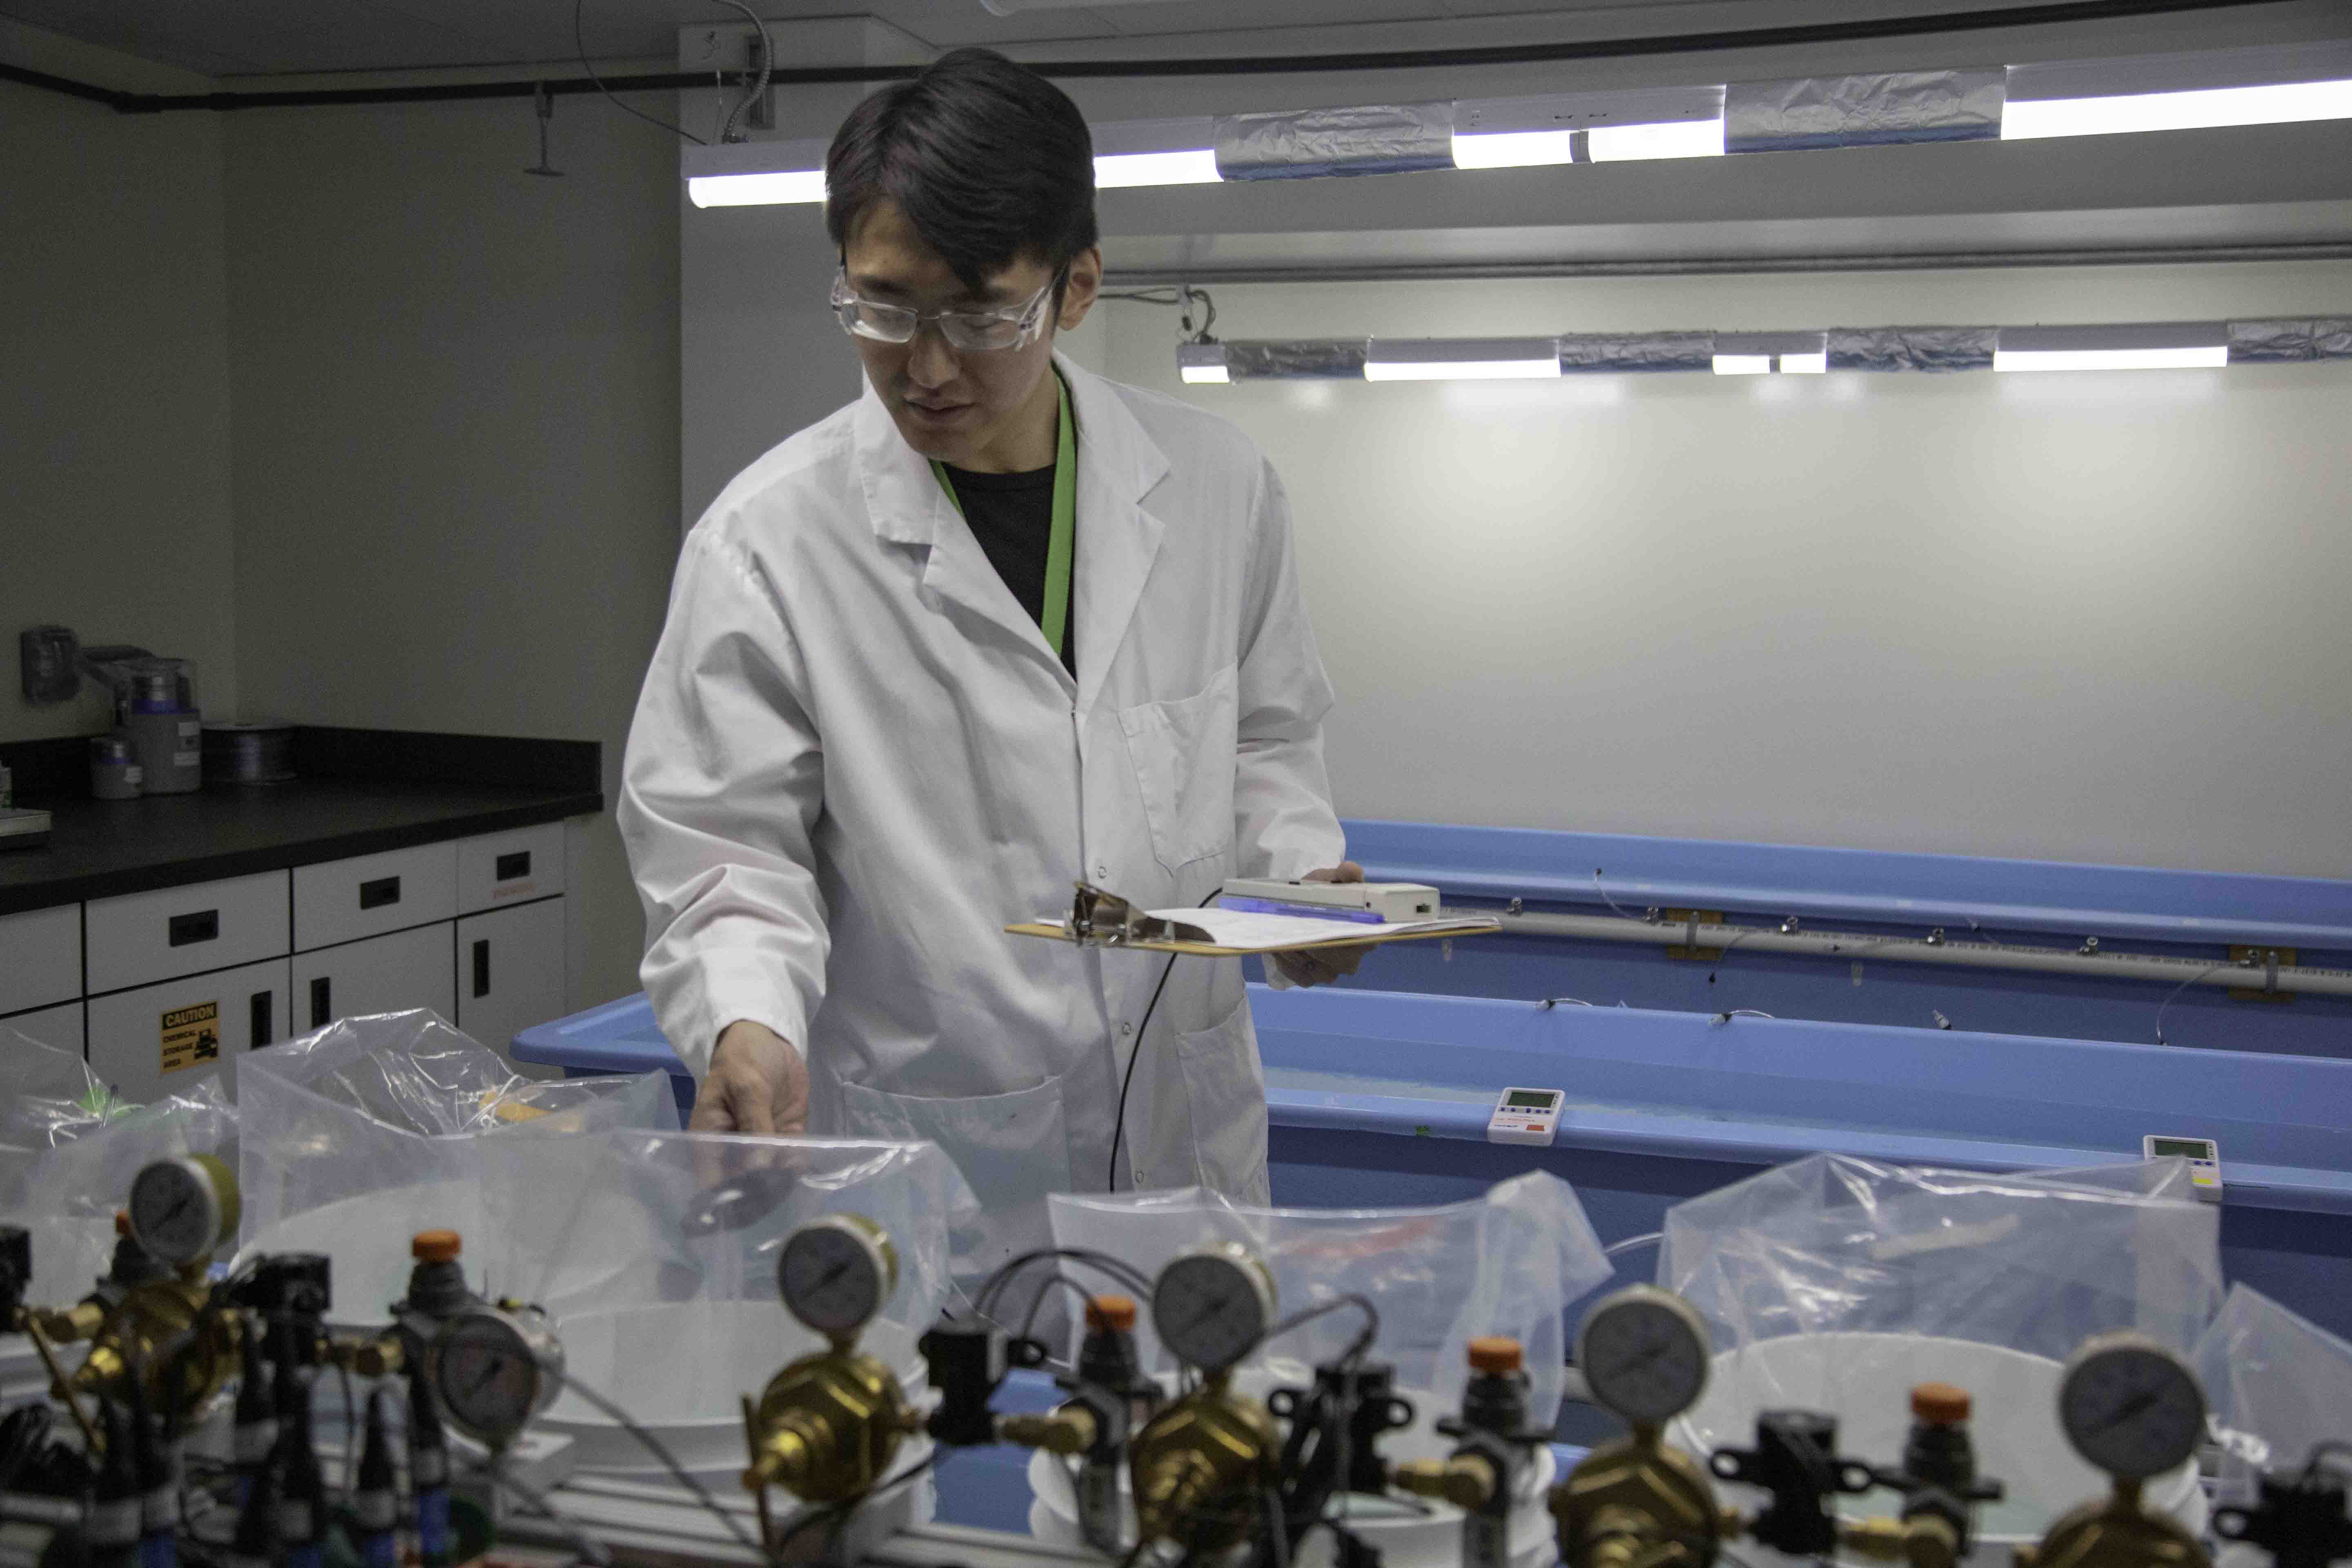 src aquatic expert performs tests in lab